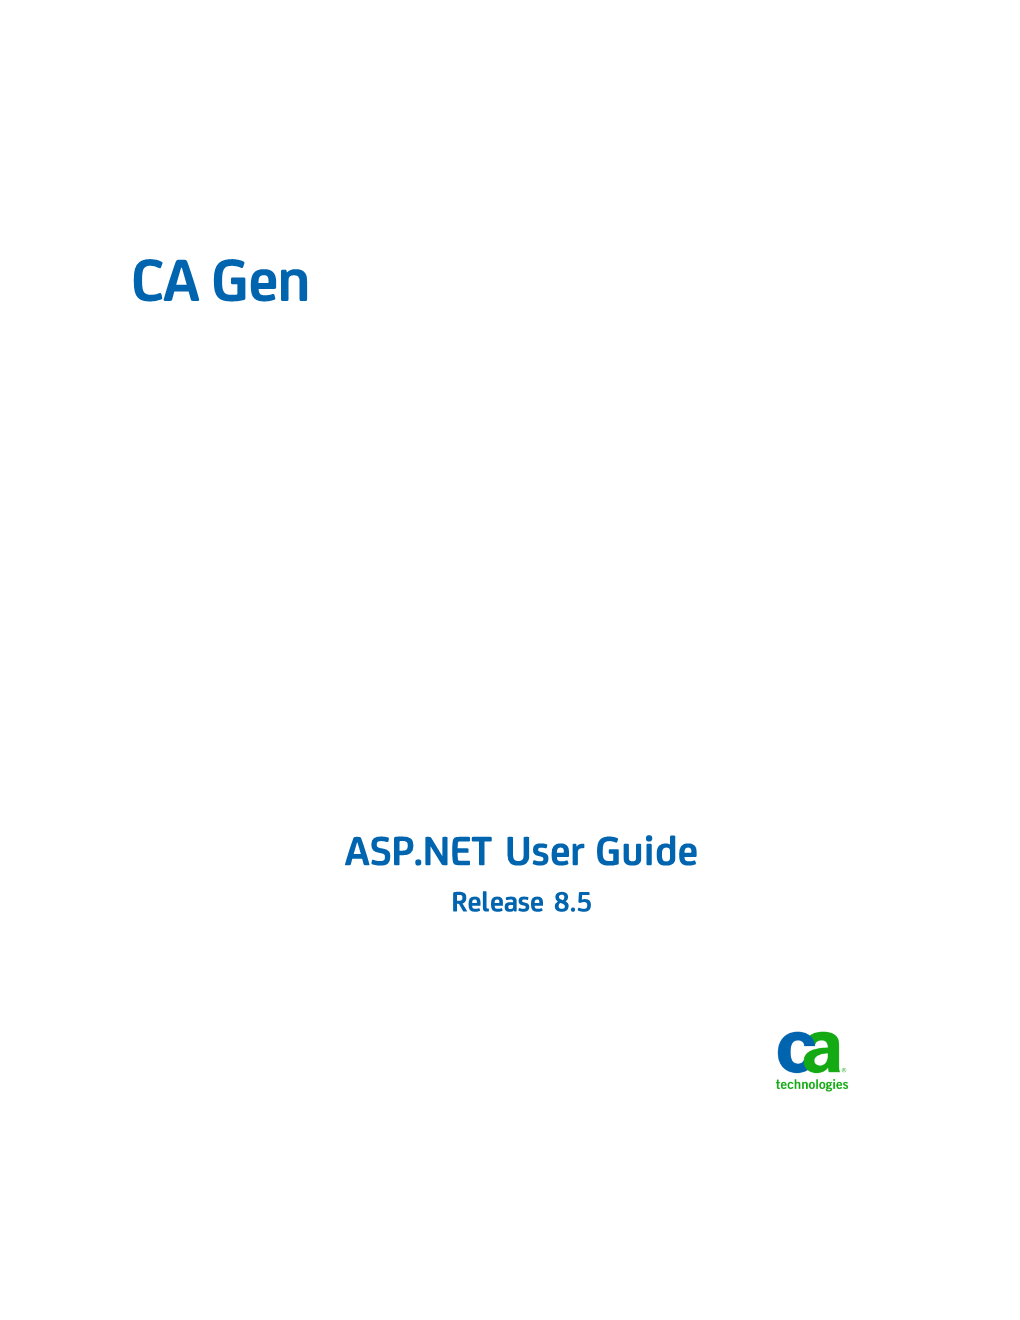 CA Gen ASP.NET User Guide